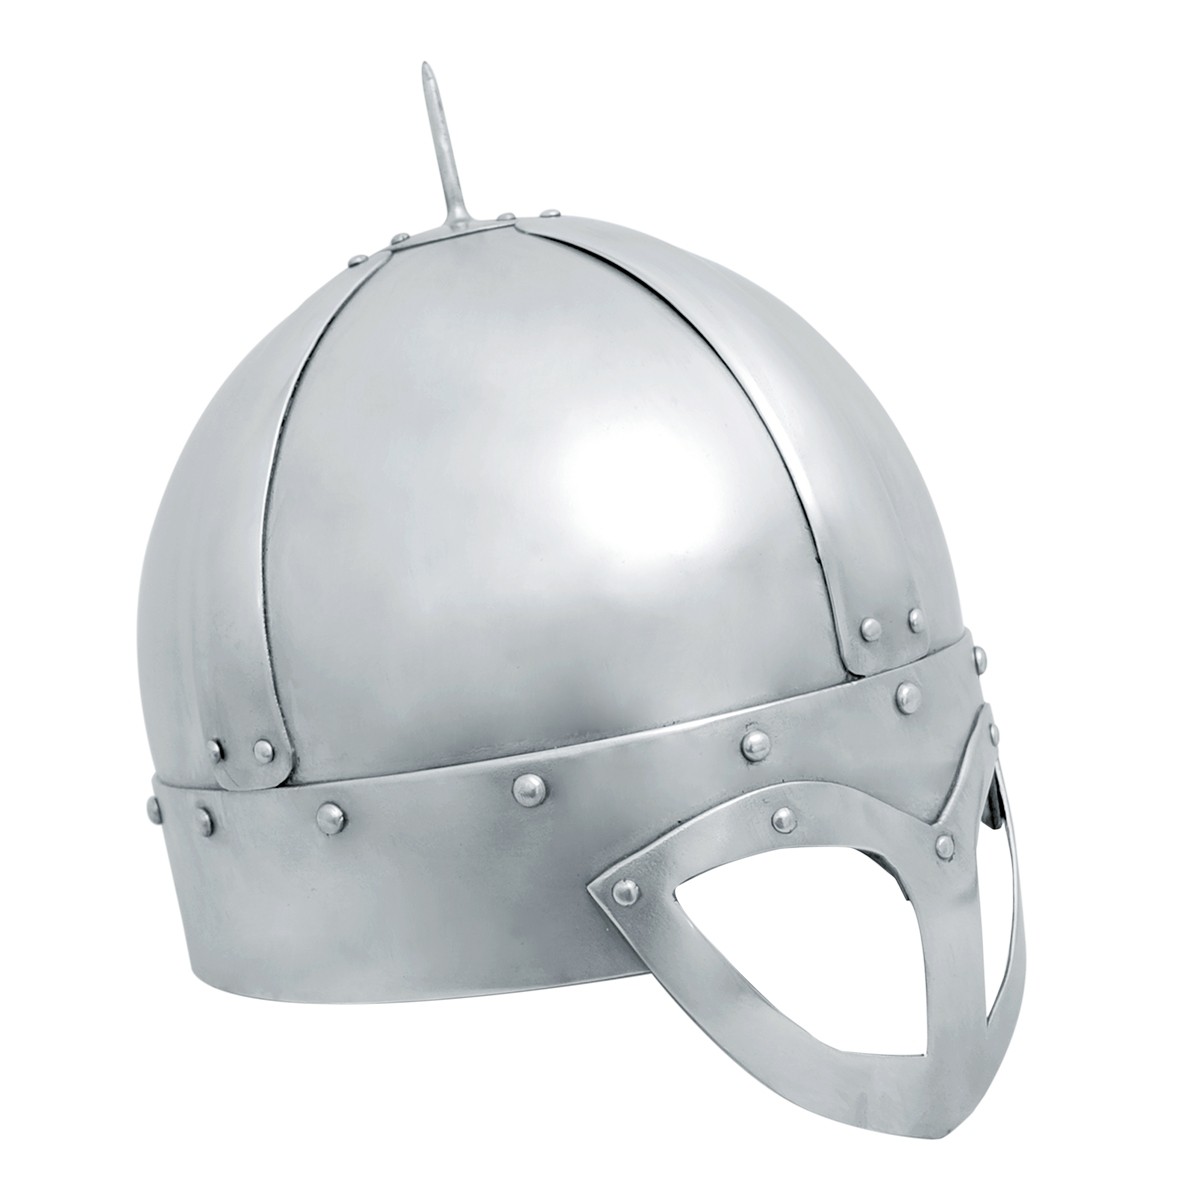 The Gjermundbu helmet